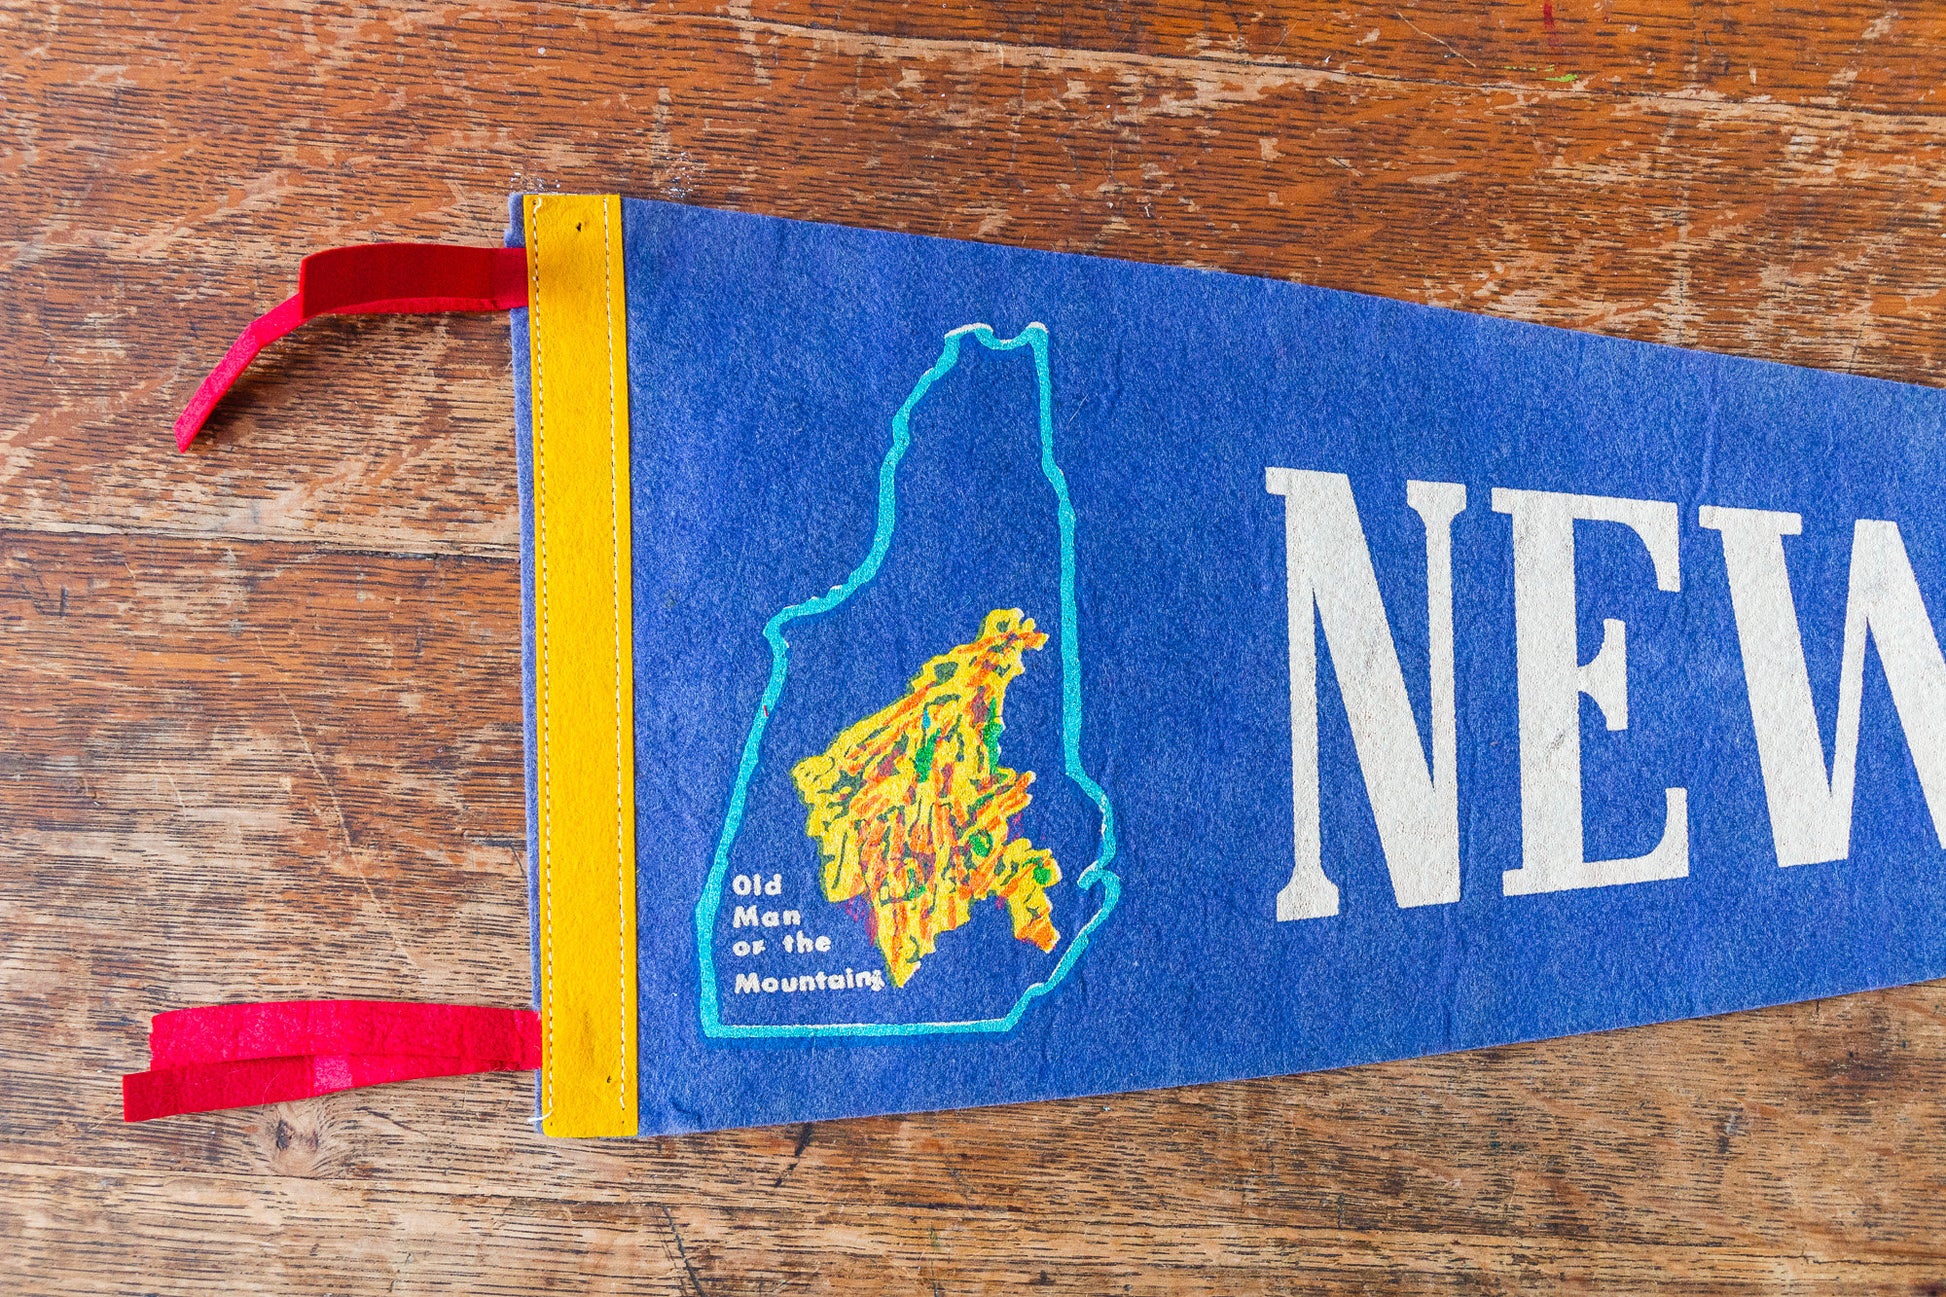 New Hampshire Blue Felt Pennant Vintage NH Wall Decor - Eagle's Eye Finds